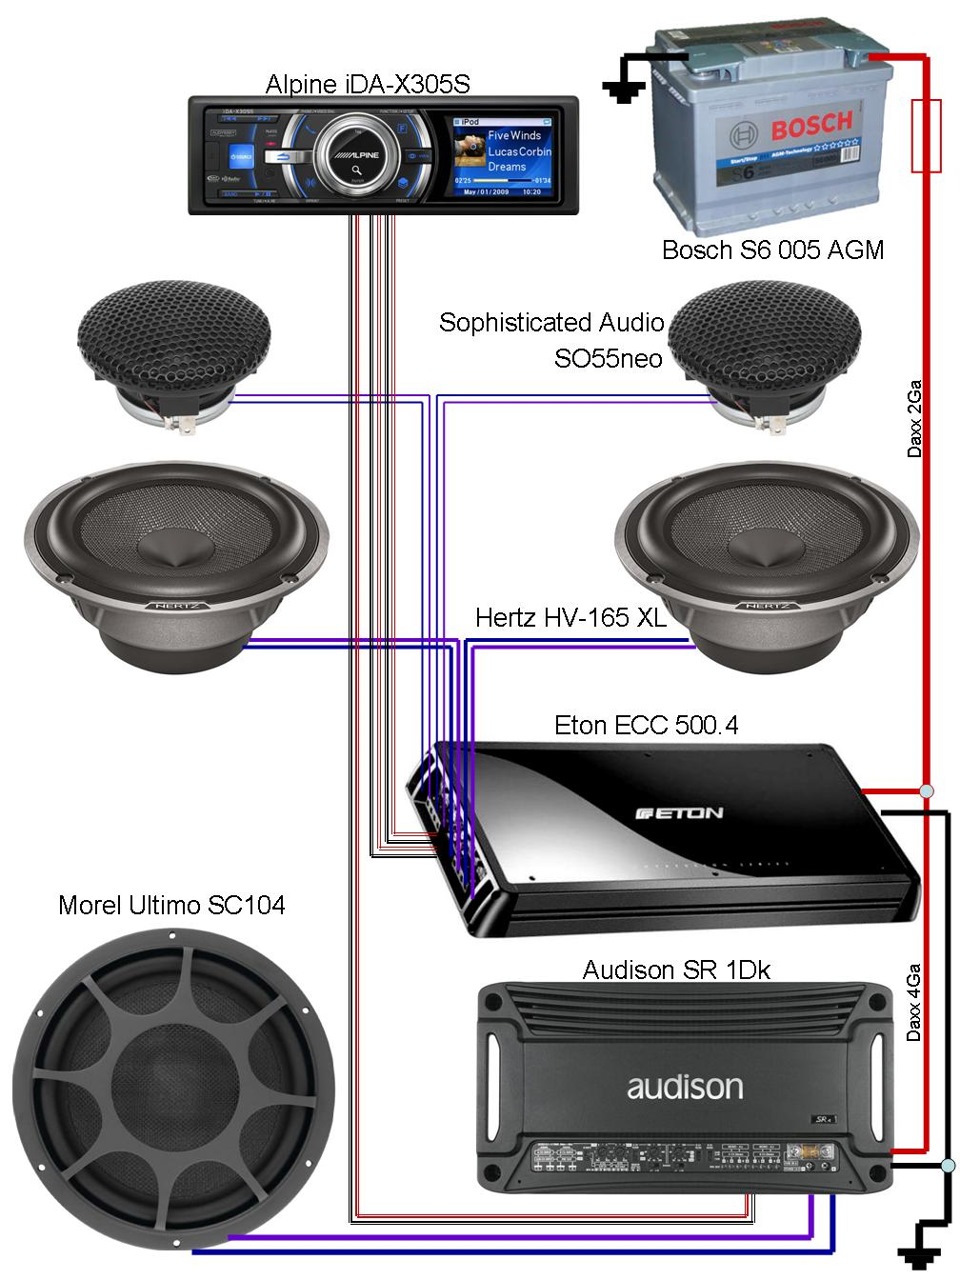 New component. So Audio 55 Neo Размеры. Алпайн Ida x305s характеристики. So Audio so55neo характеристики. So55neo чертеж.